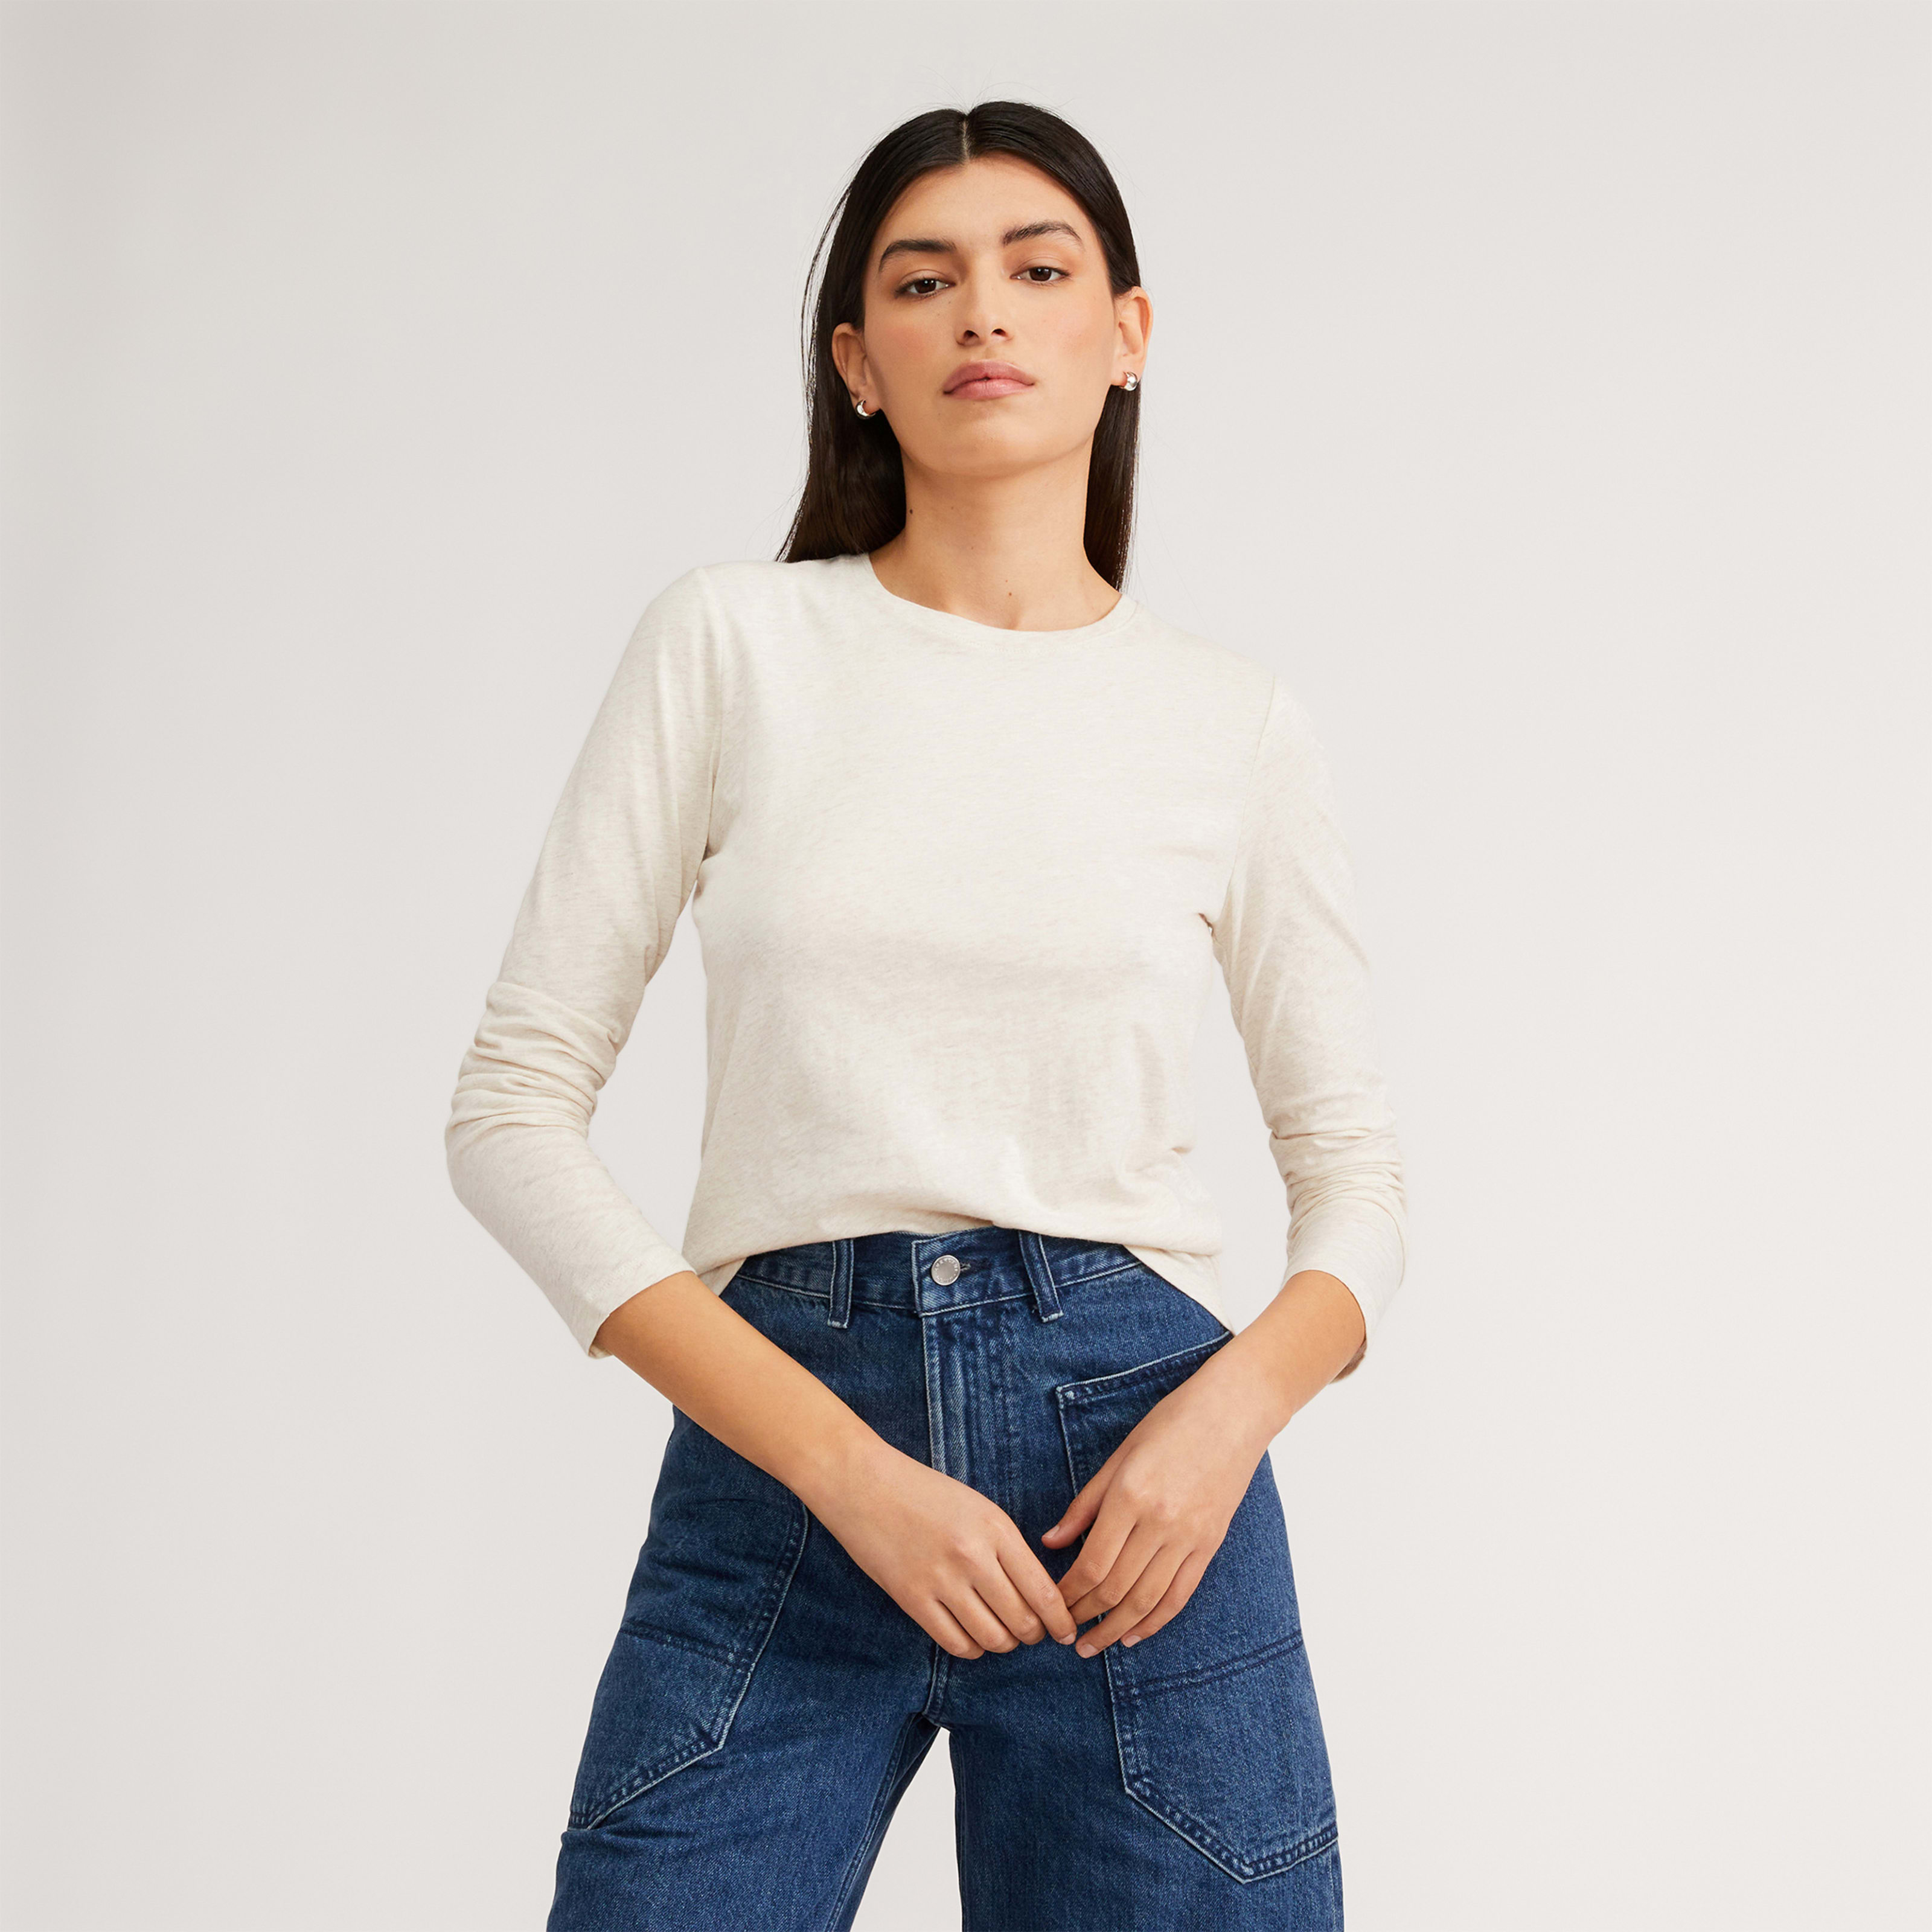 women's organic cotton long-sleeve crew sweater by everlane in oatmeal, size xxs